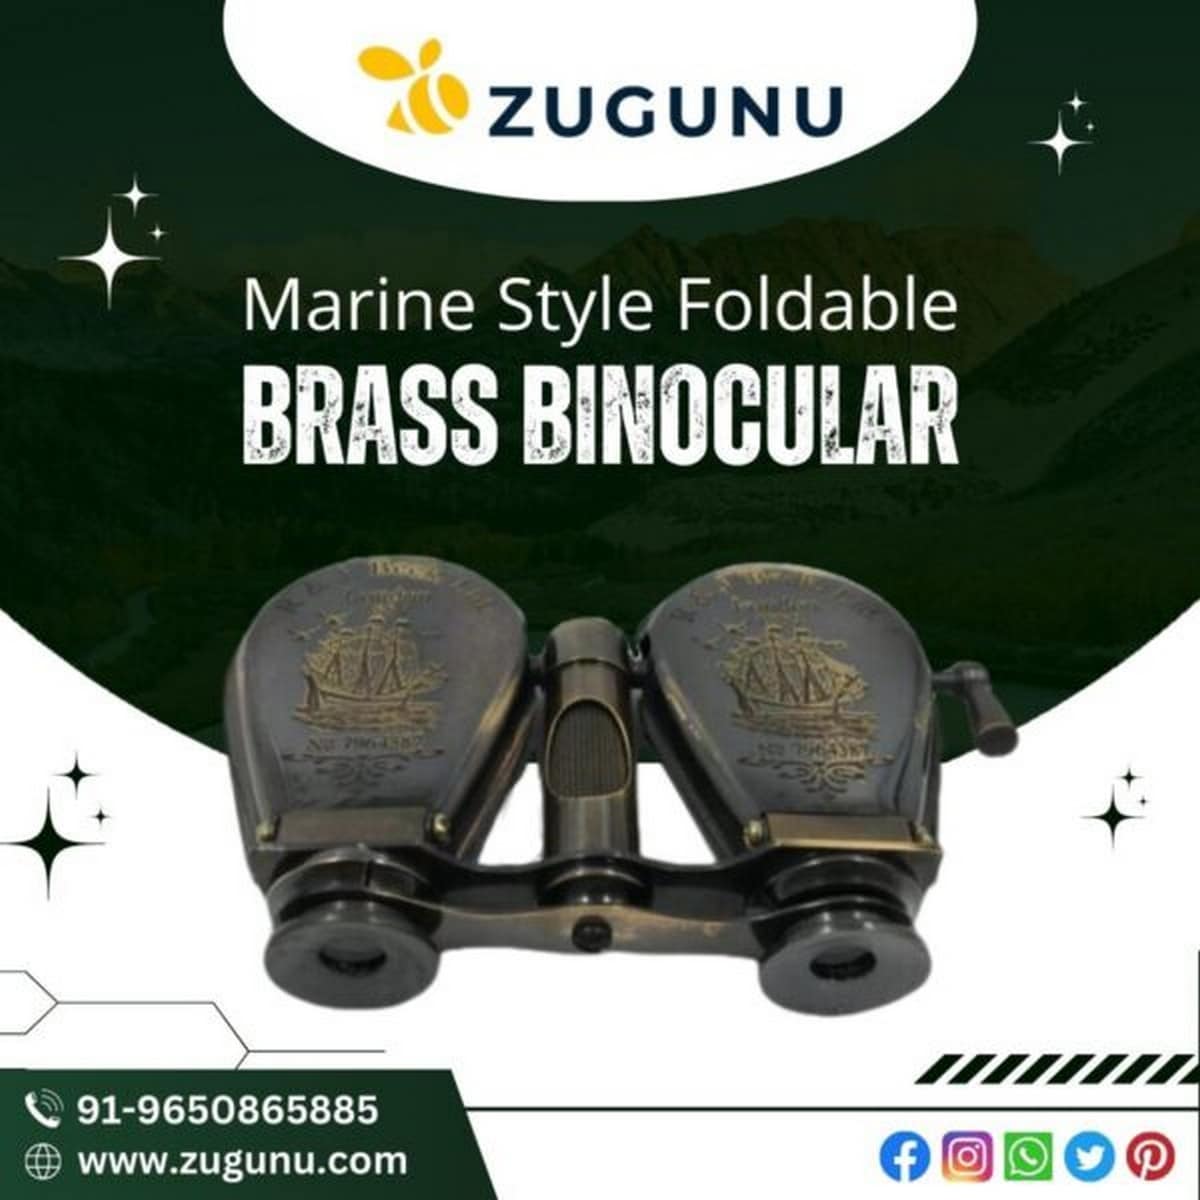 Best Marine Style Foldable Brass Binocular Online